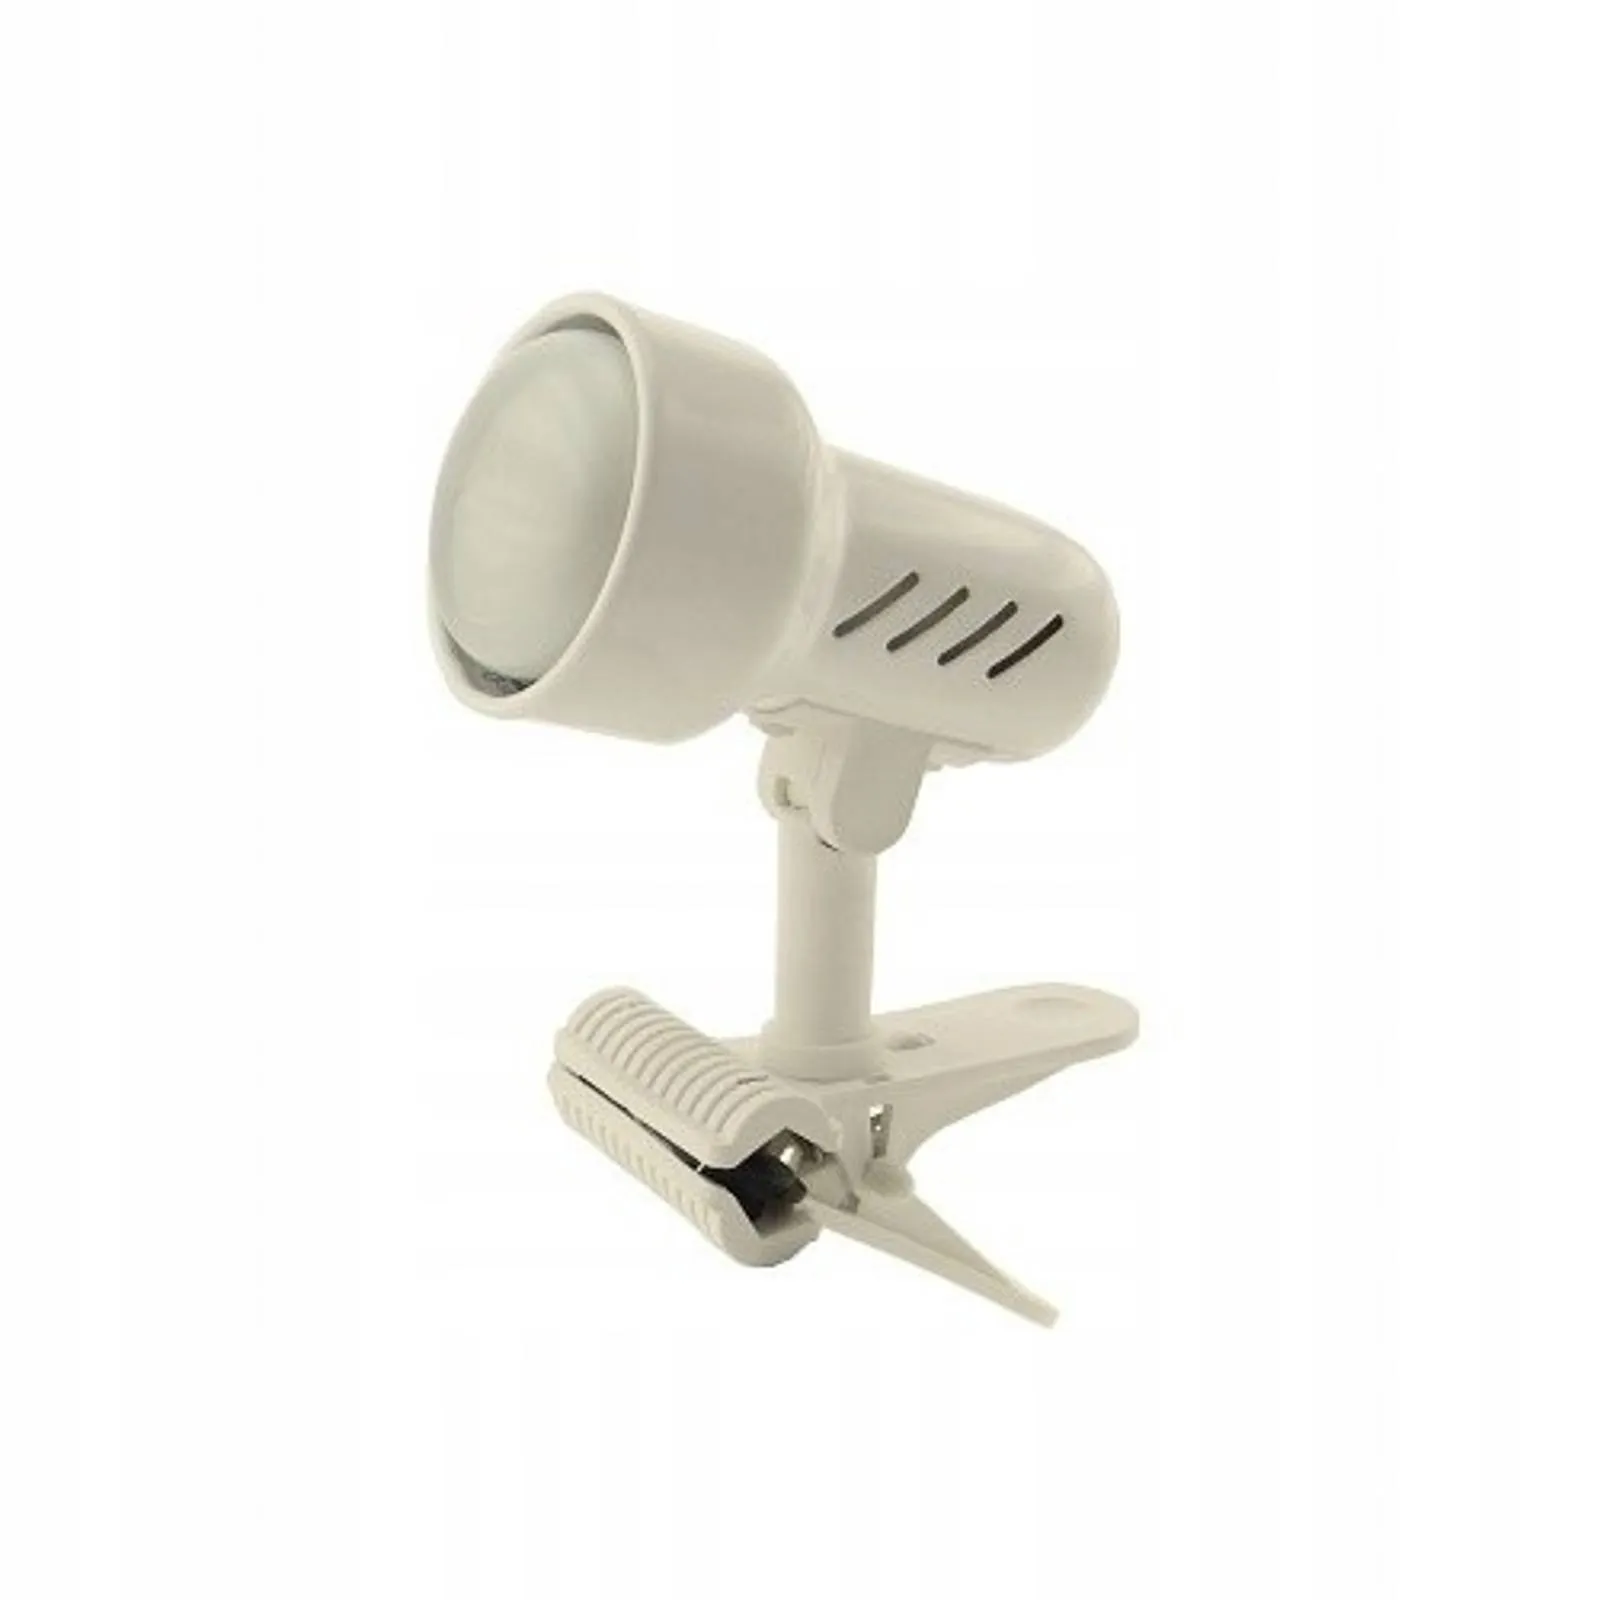 KD White clip-on light with plug, E27 socket